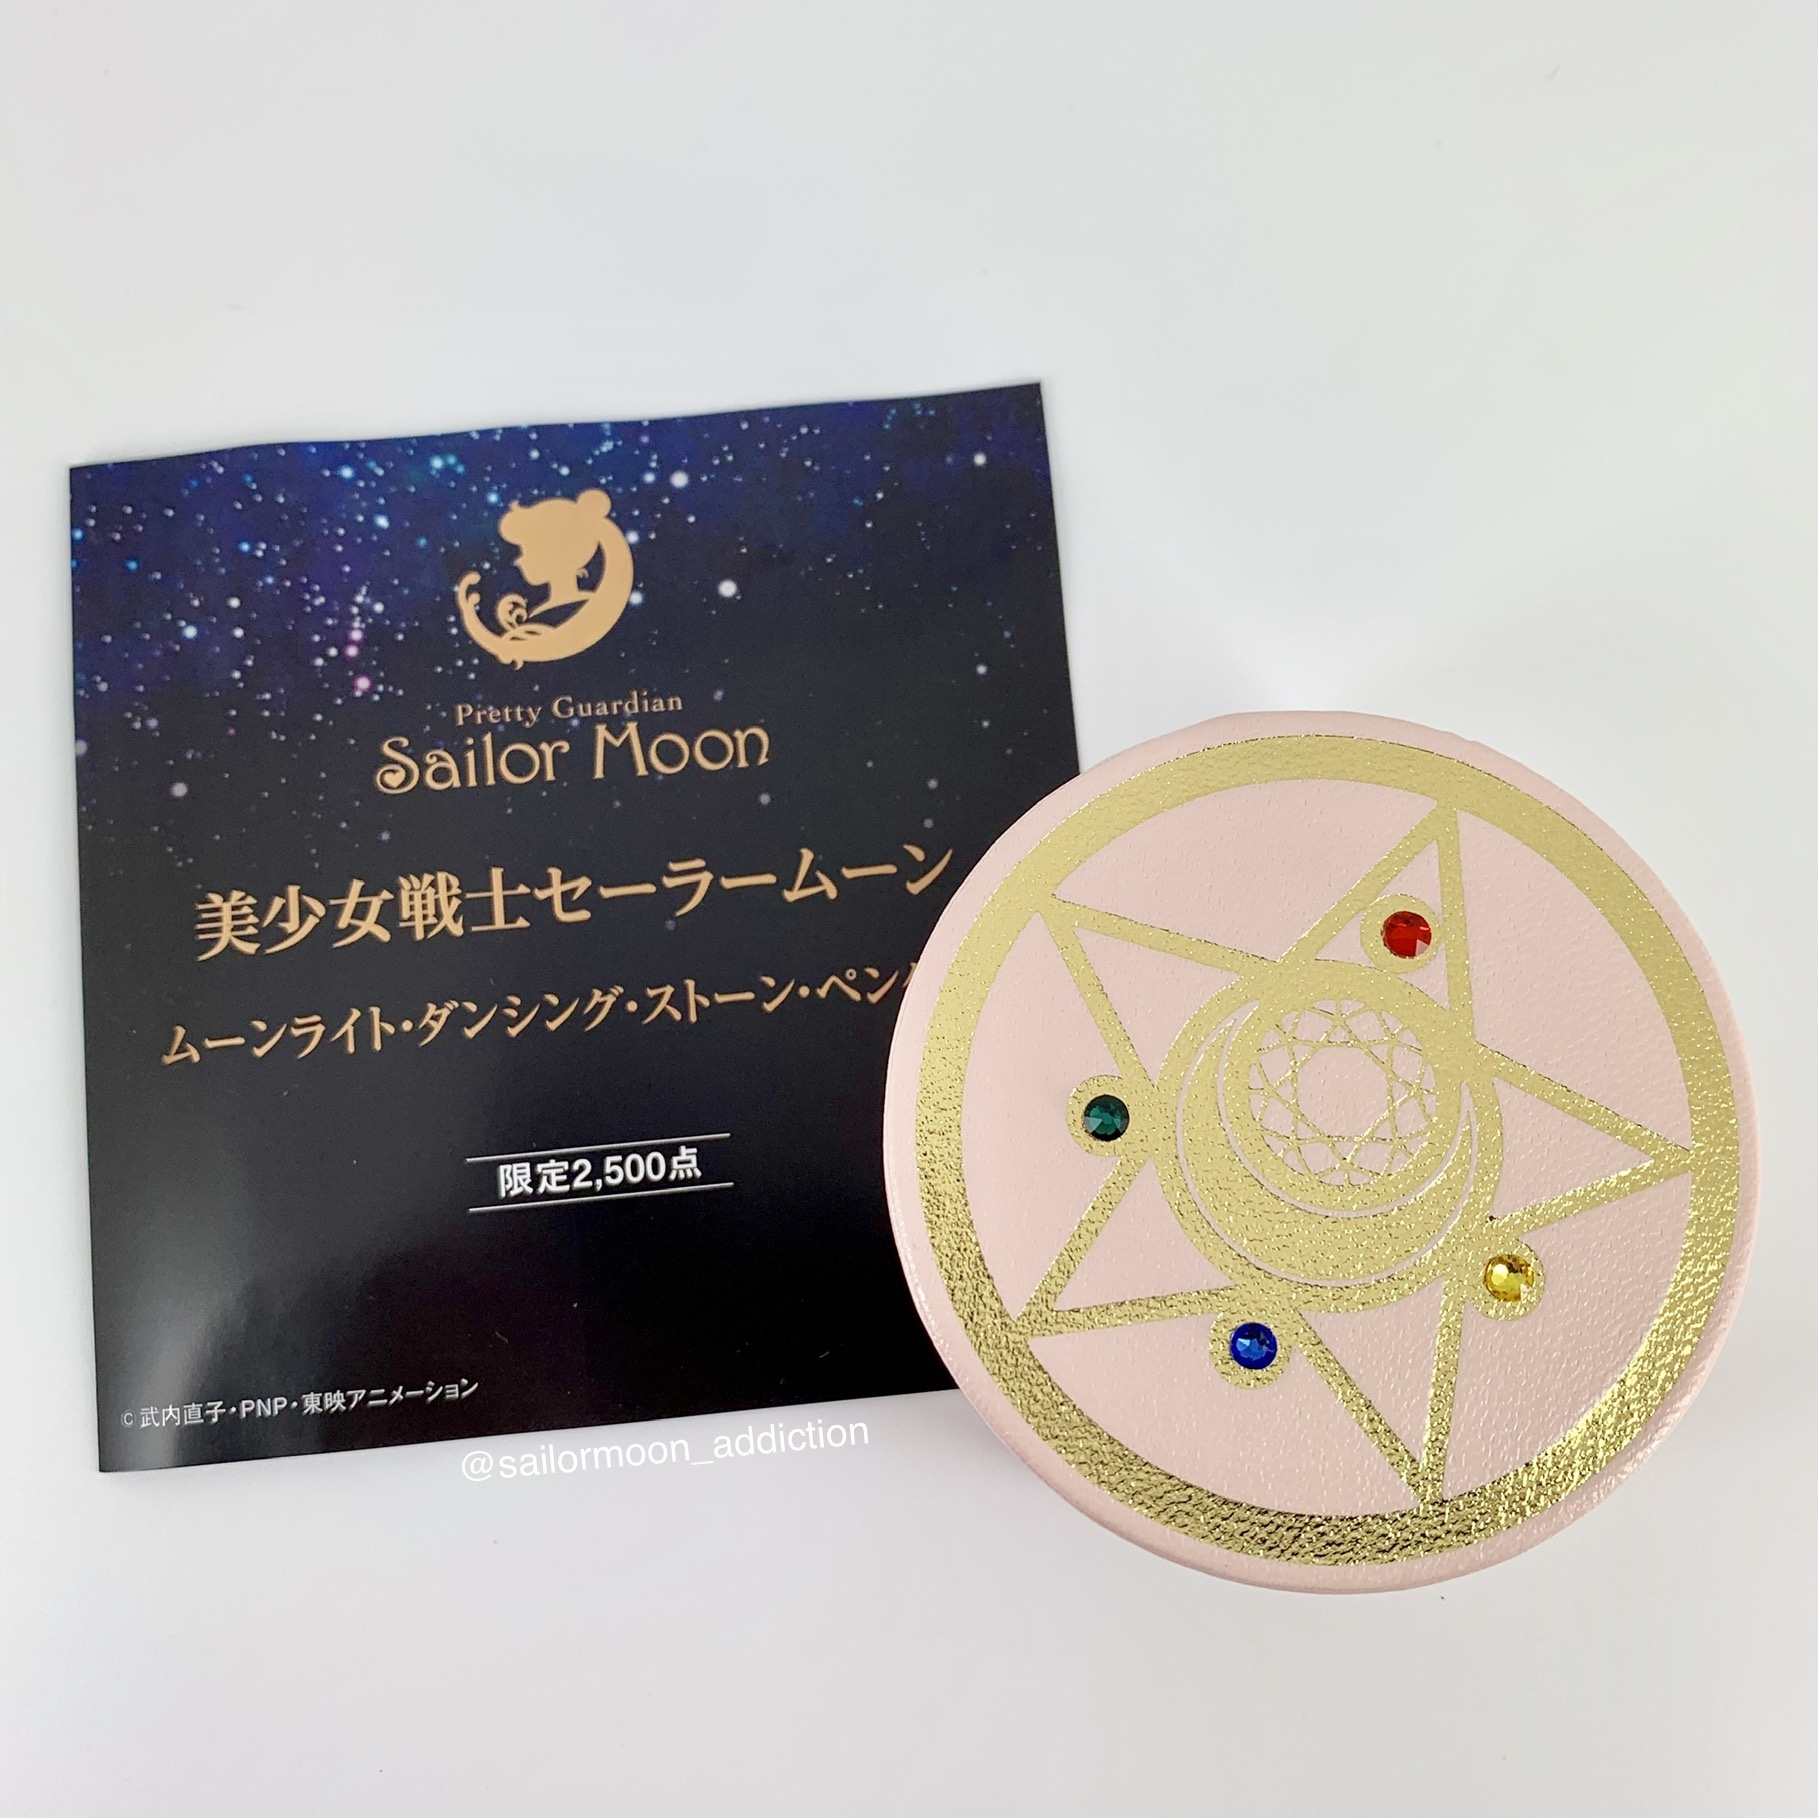 Premico Sailor Moon Moonlight Dancing Stone Pendant Box